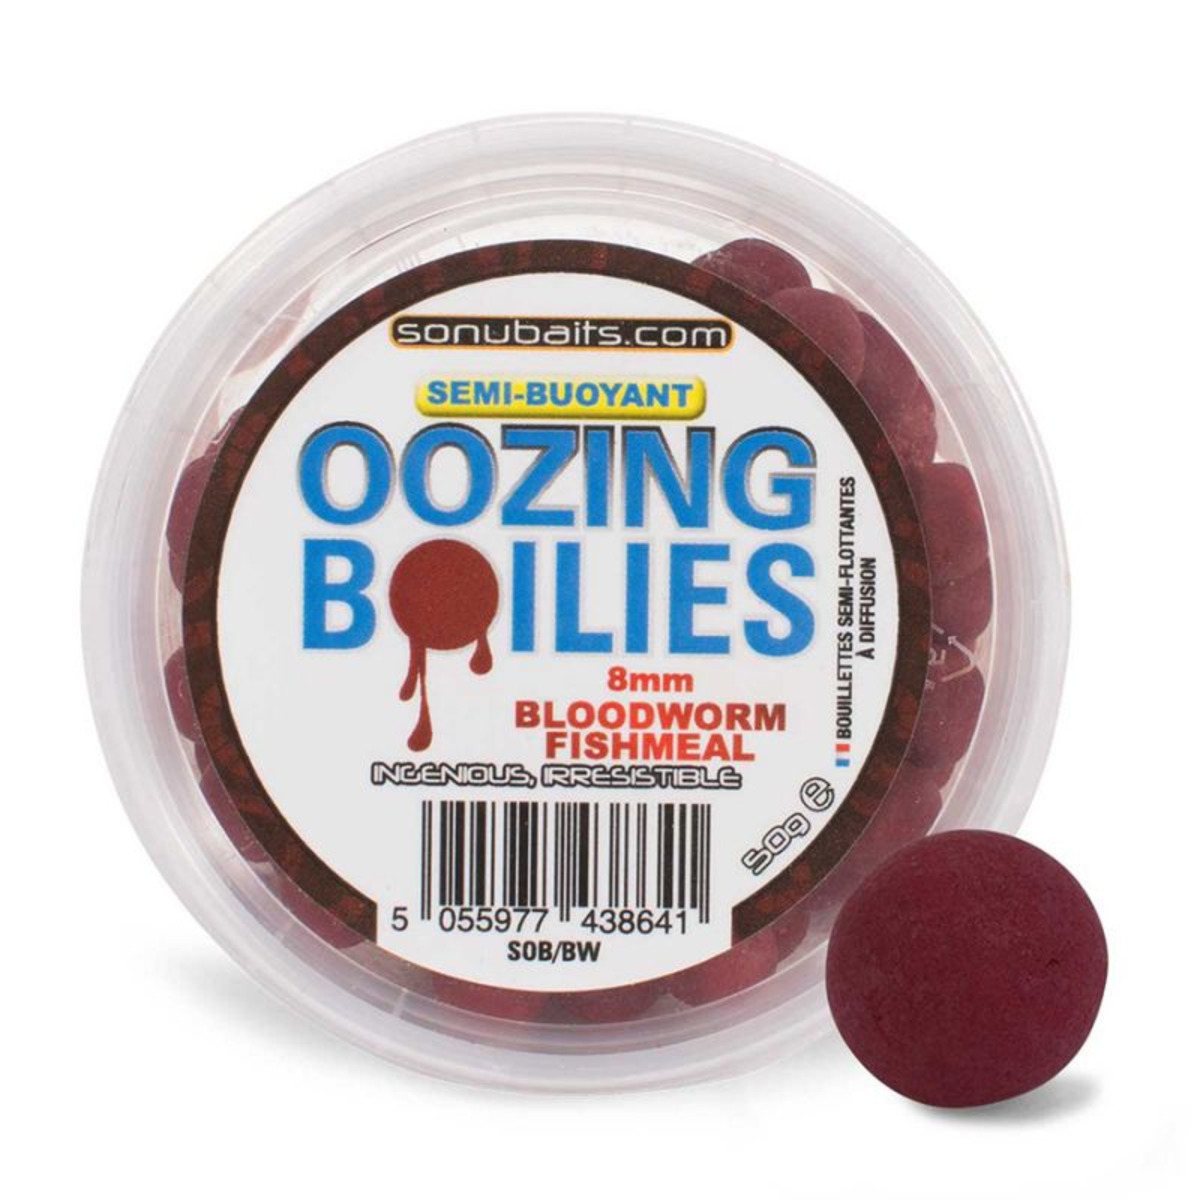 Sonubaits Semi-Buoyant Oozing Boilies - 8 mm - Bloodworm Fishmeal